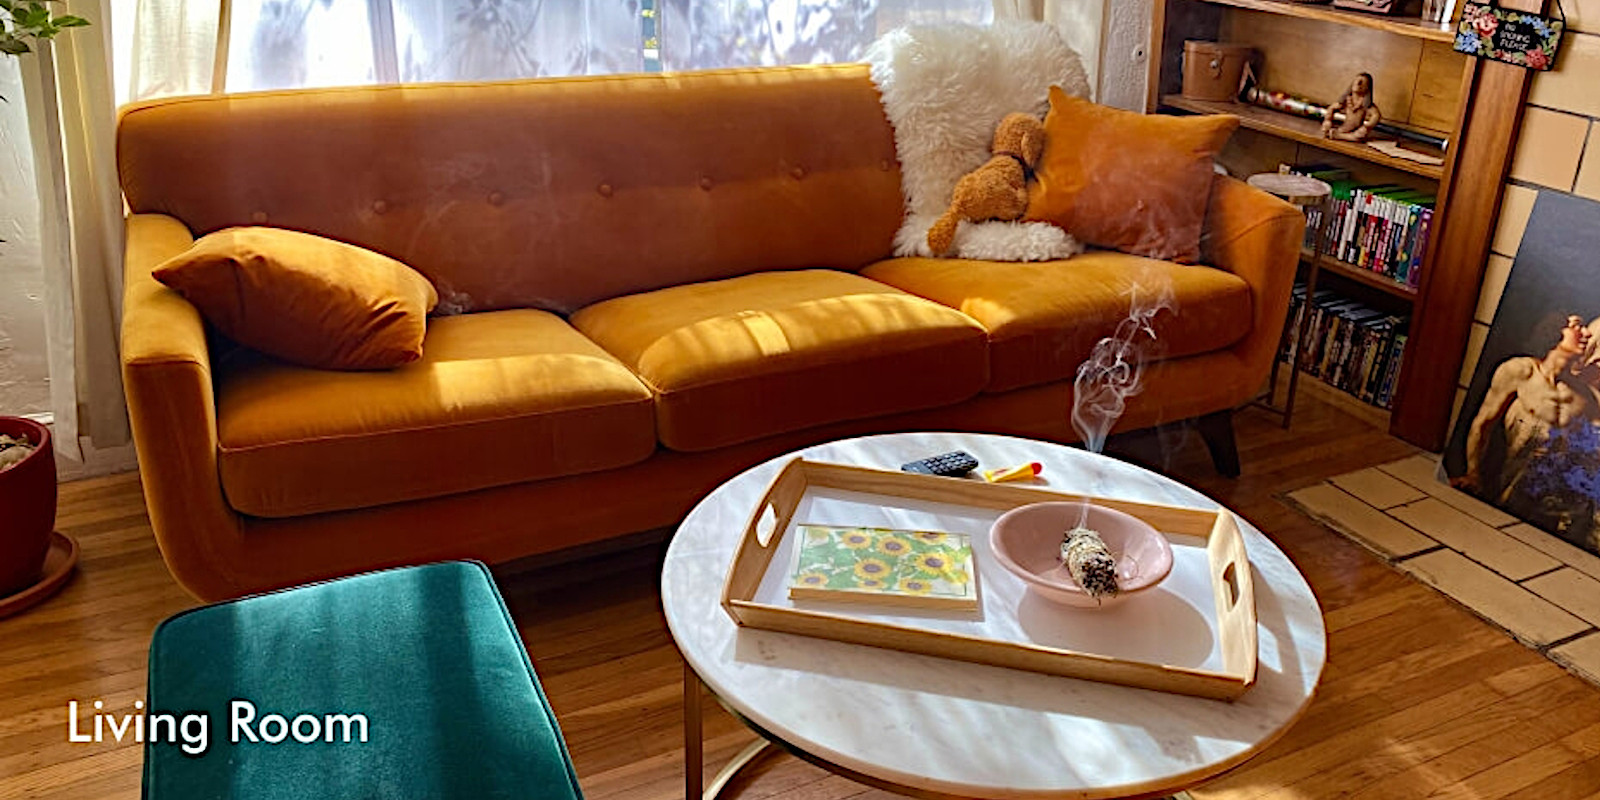 Livingroom furniture promo price